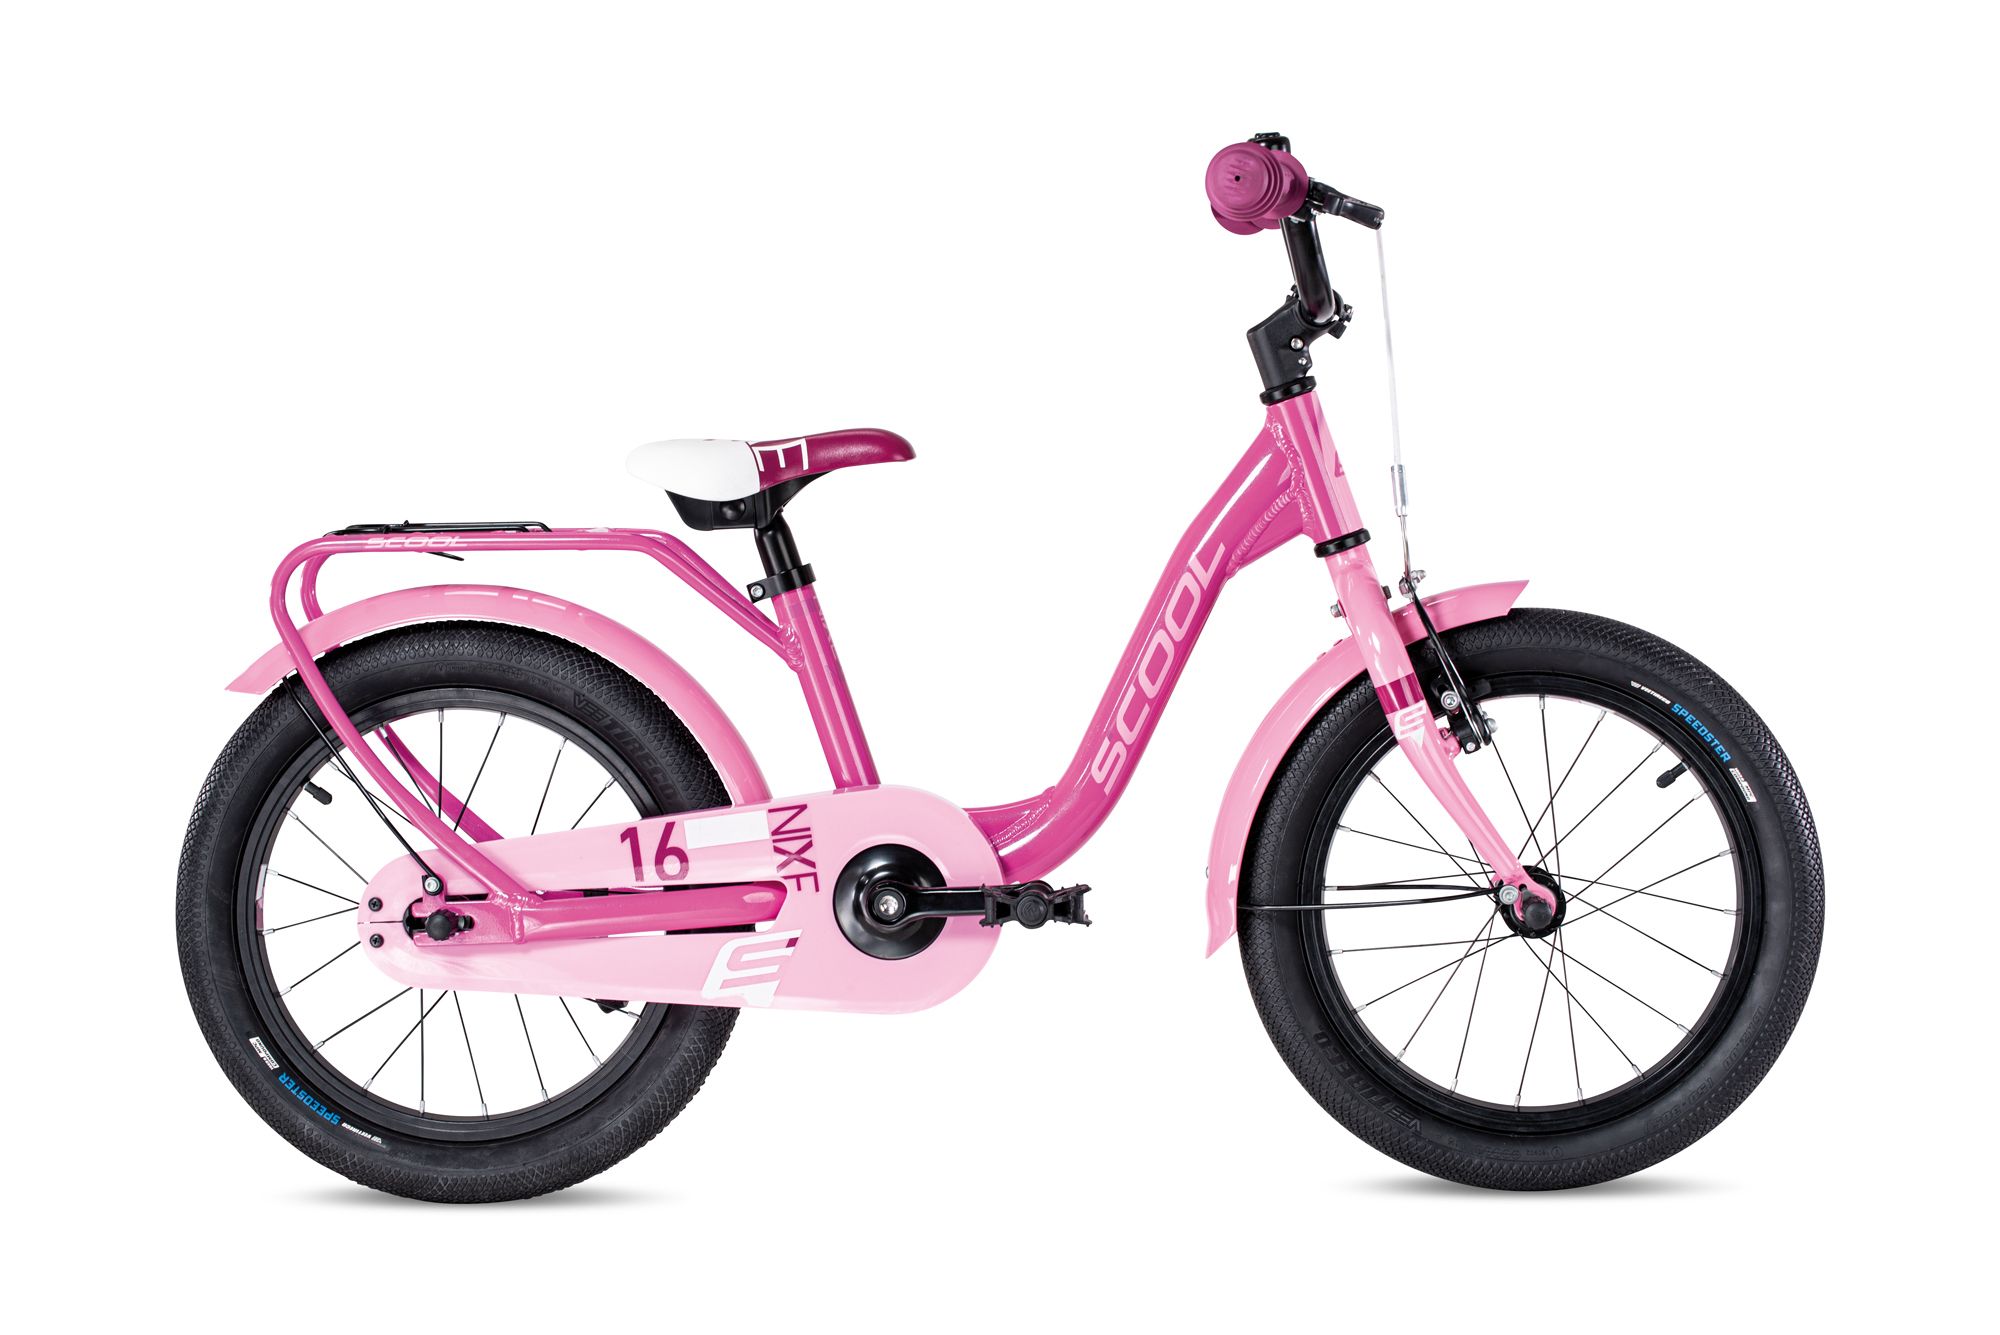 S'cool niXe alloy 16 pink/lightpink - Fahrrad Online Shop